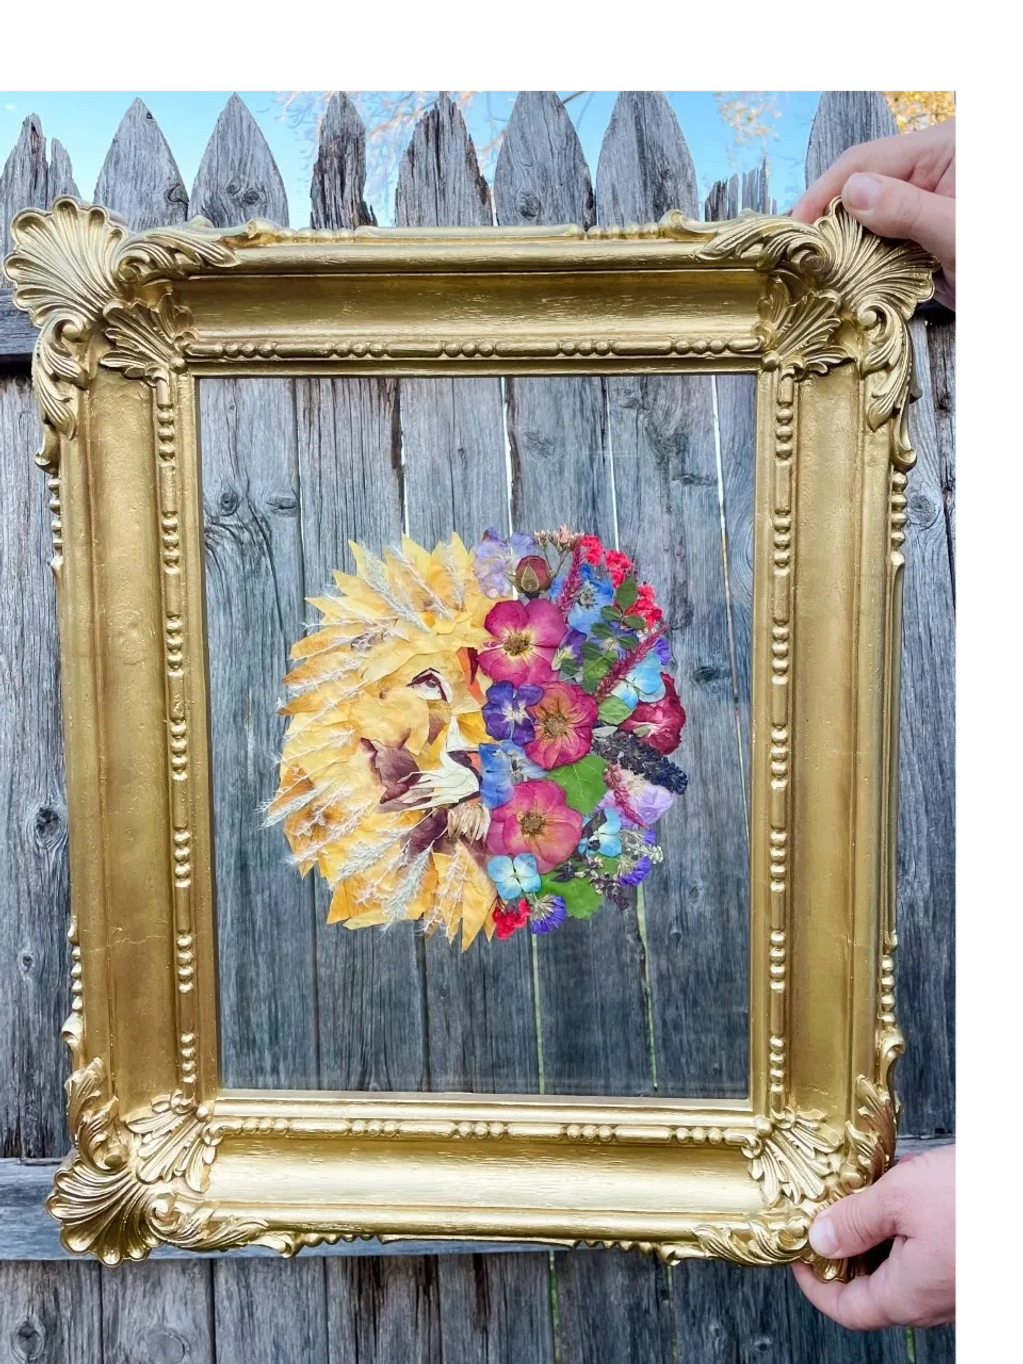 Pressed flower lion between glass, in a vintage gold frame.